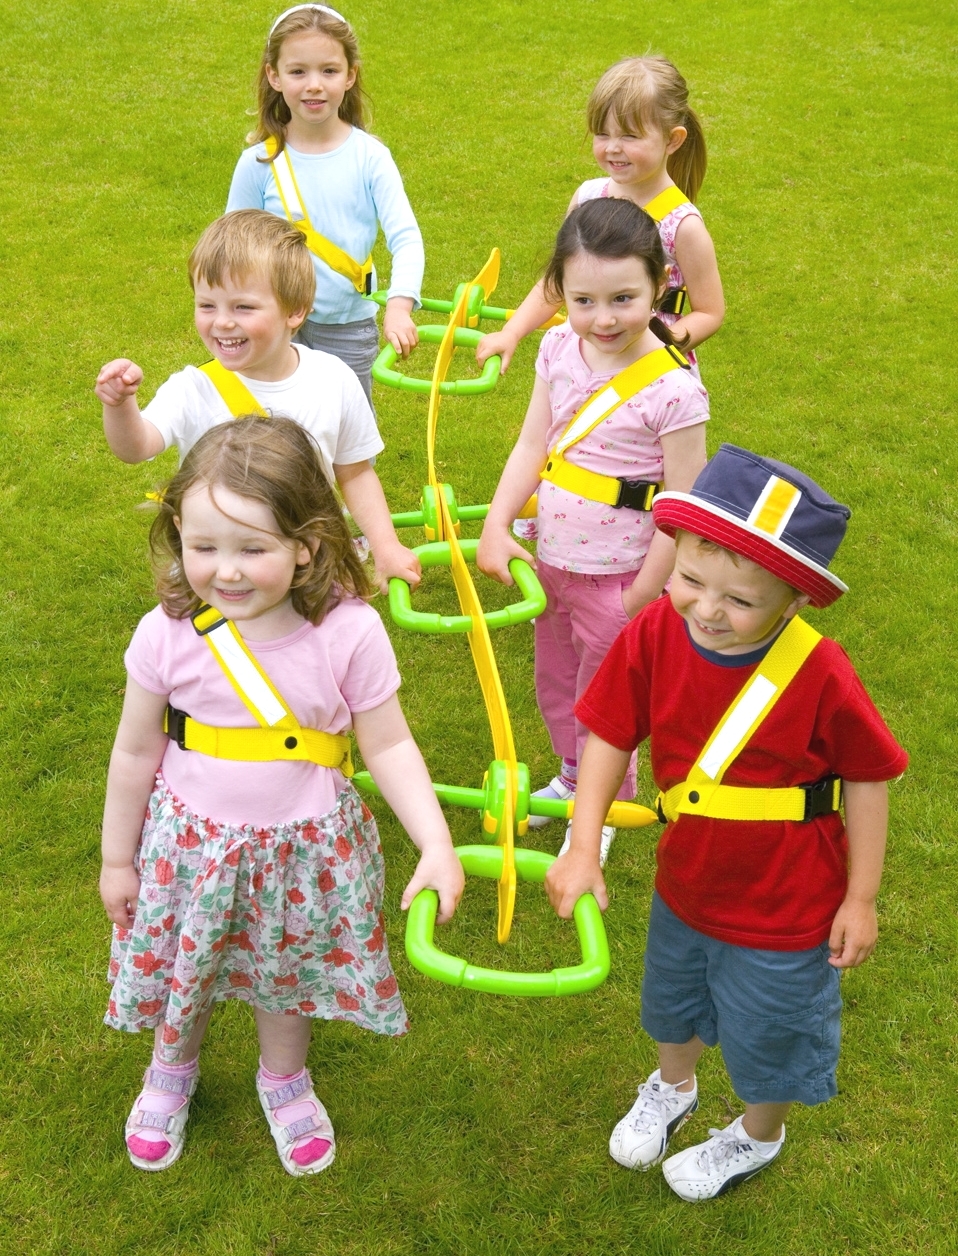 12 Children& 2 Adult Safety Walking Rope Line Rope for Kids Walking Rope for Preschool 